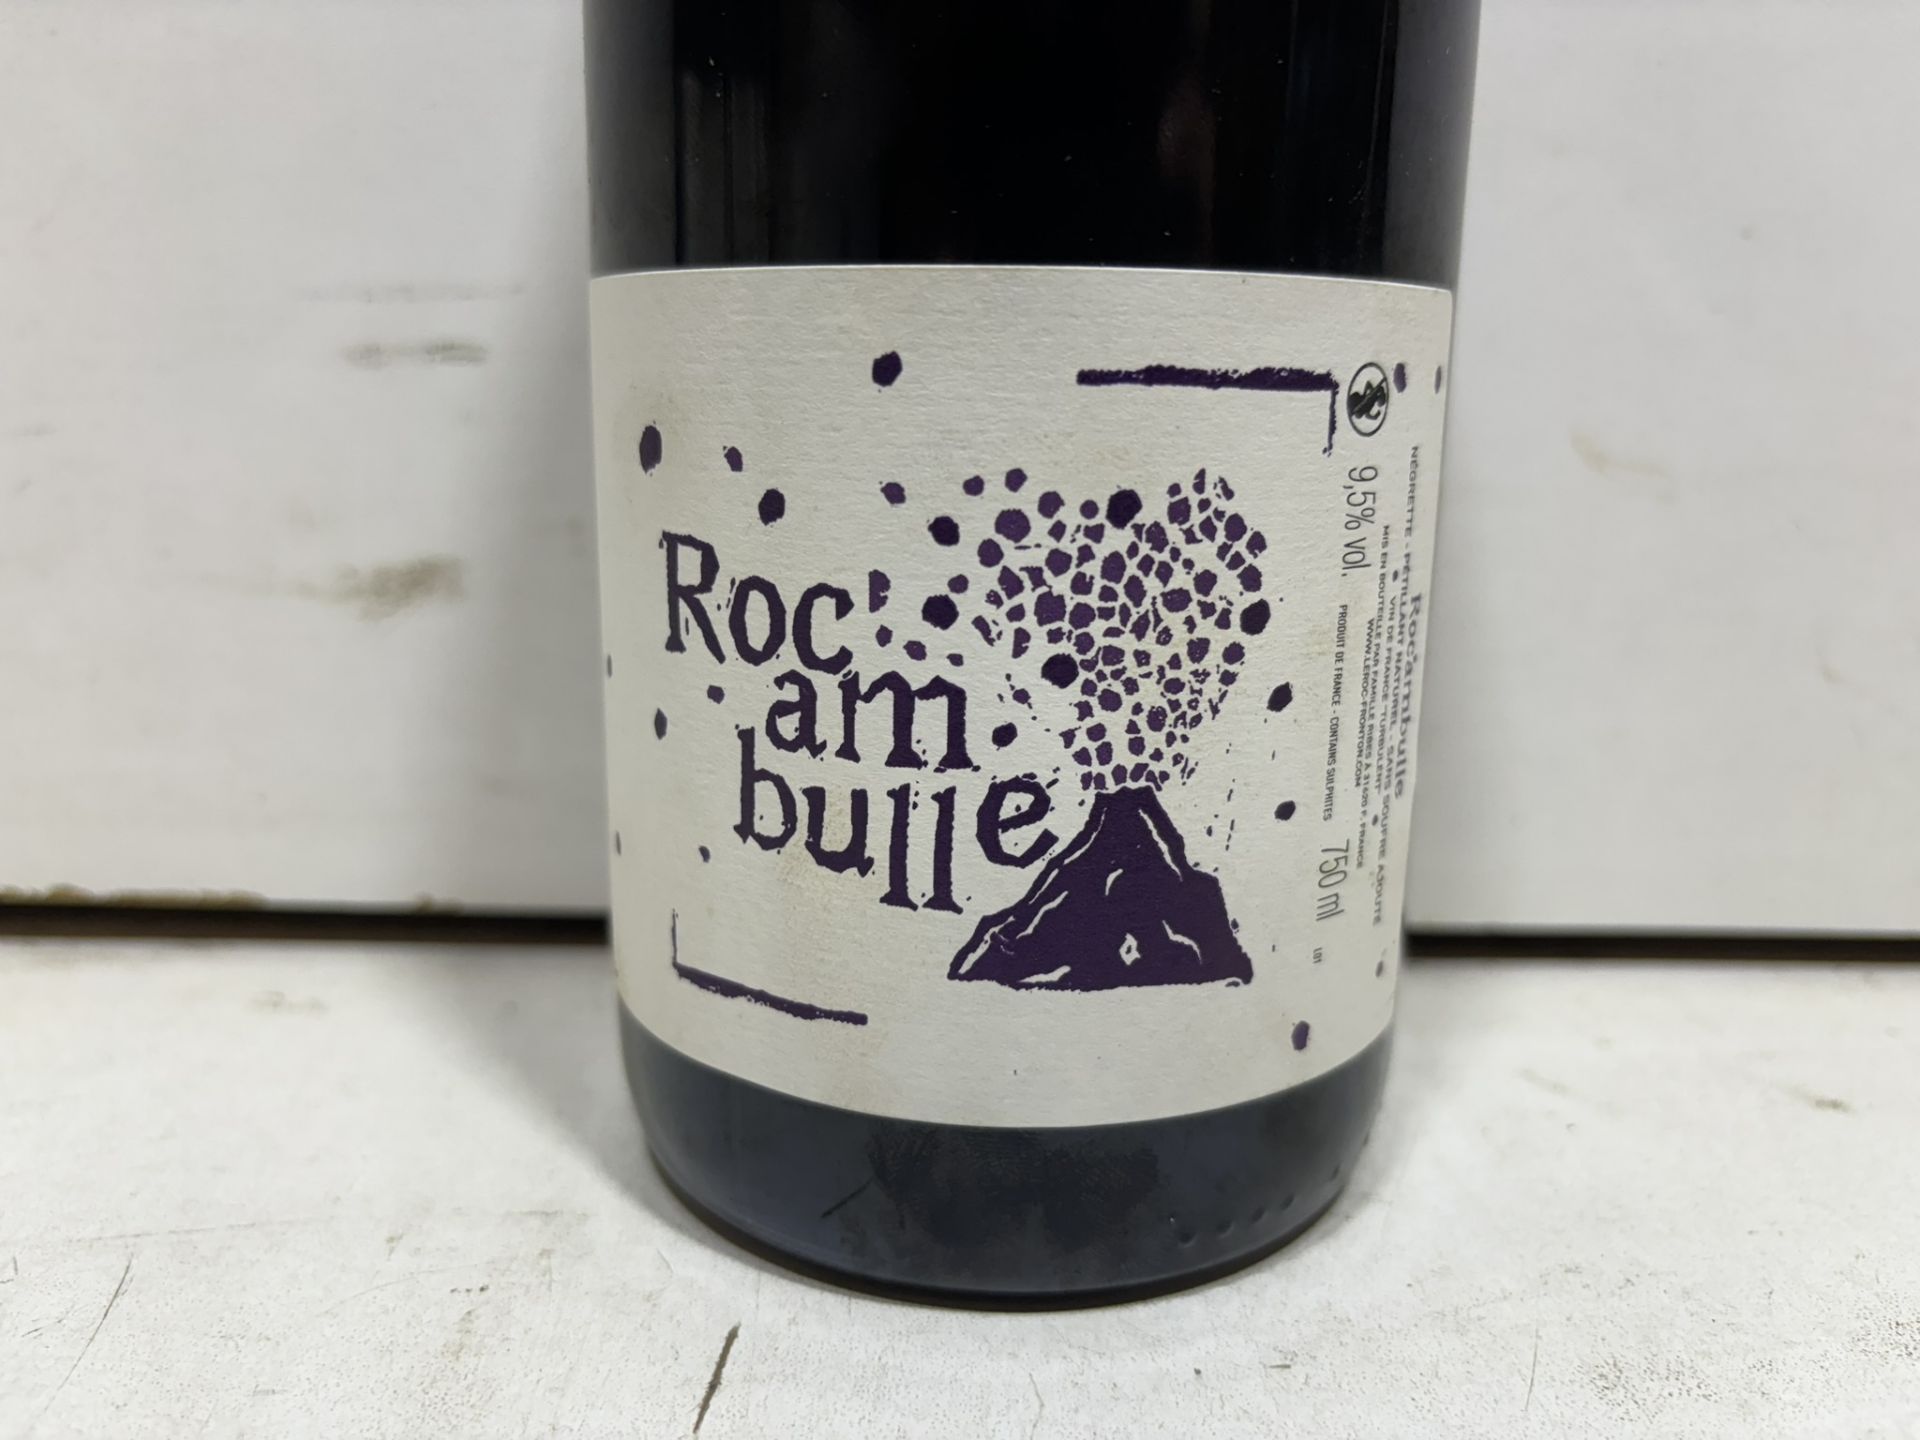 5 X Bottles Of Le Roc Ambulle, Petillant Naturel Rose 75Cl - Image 2 of 3